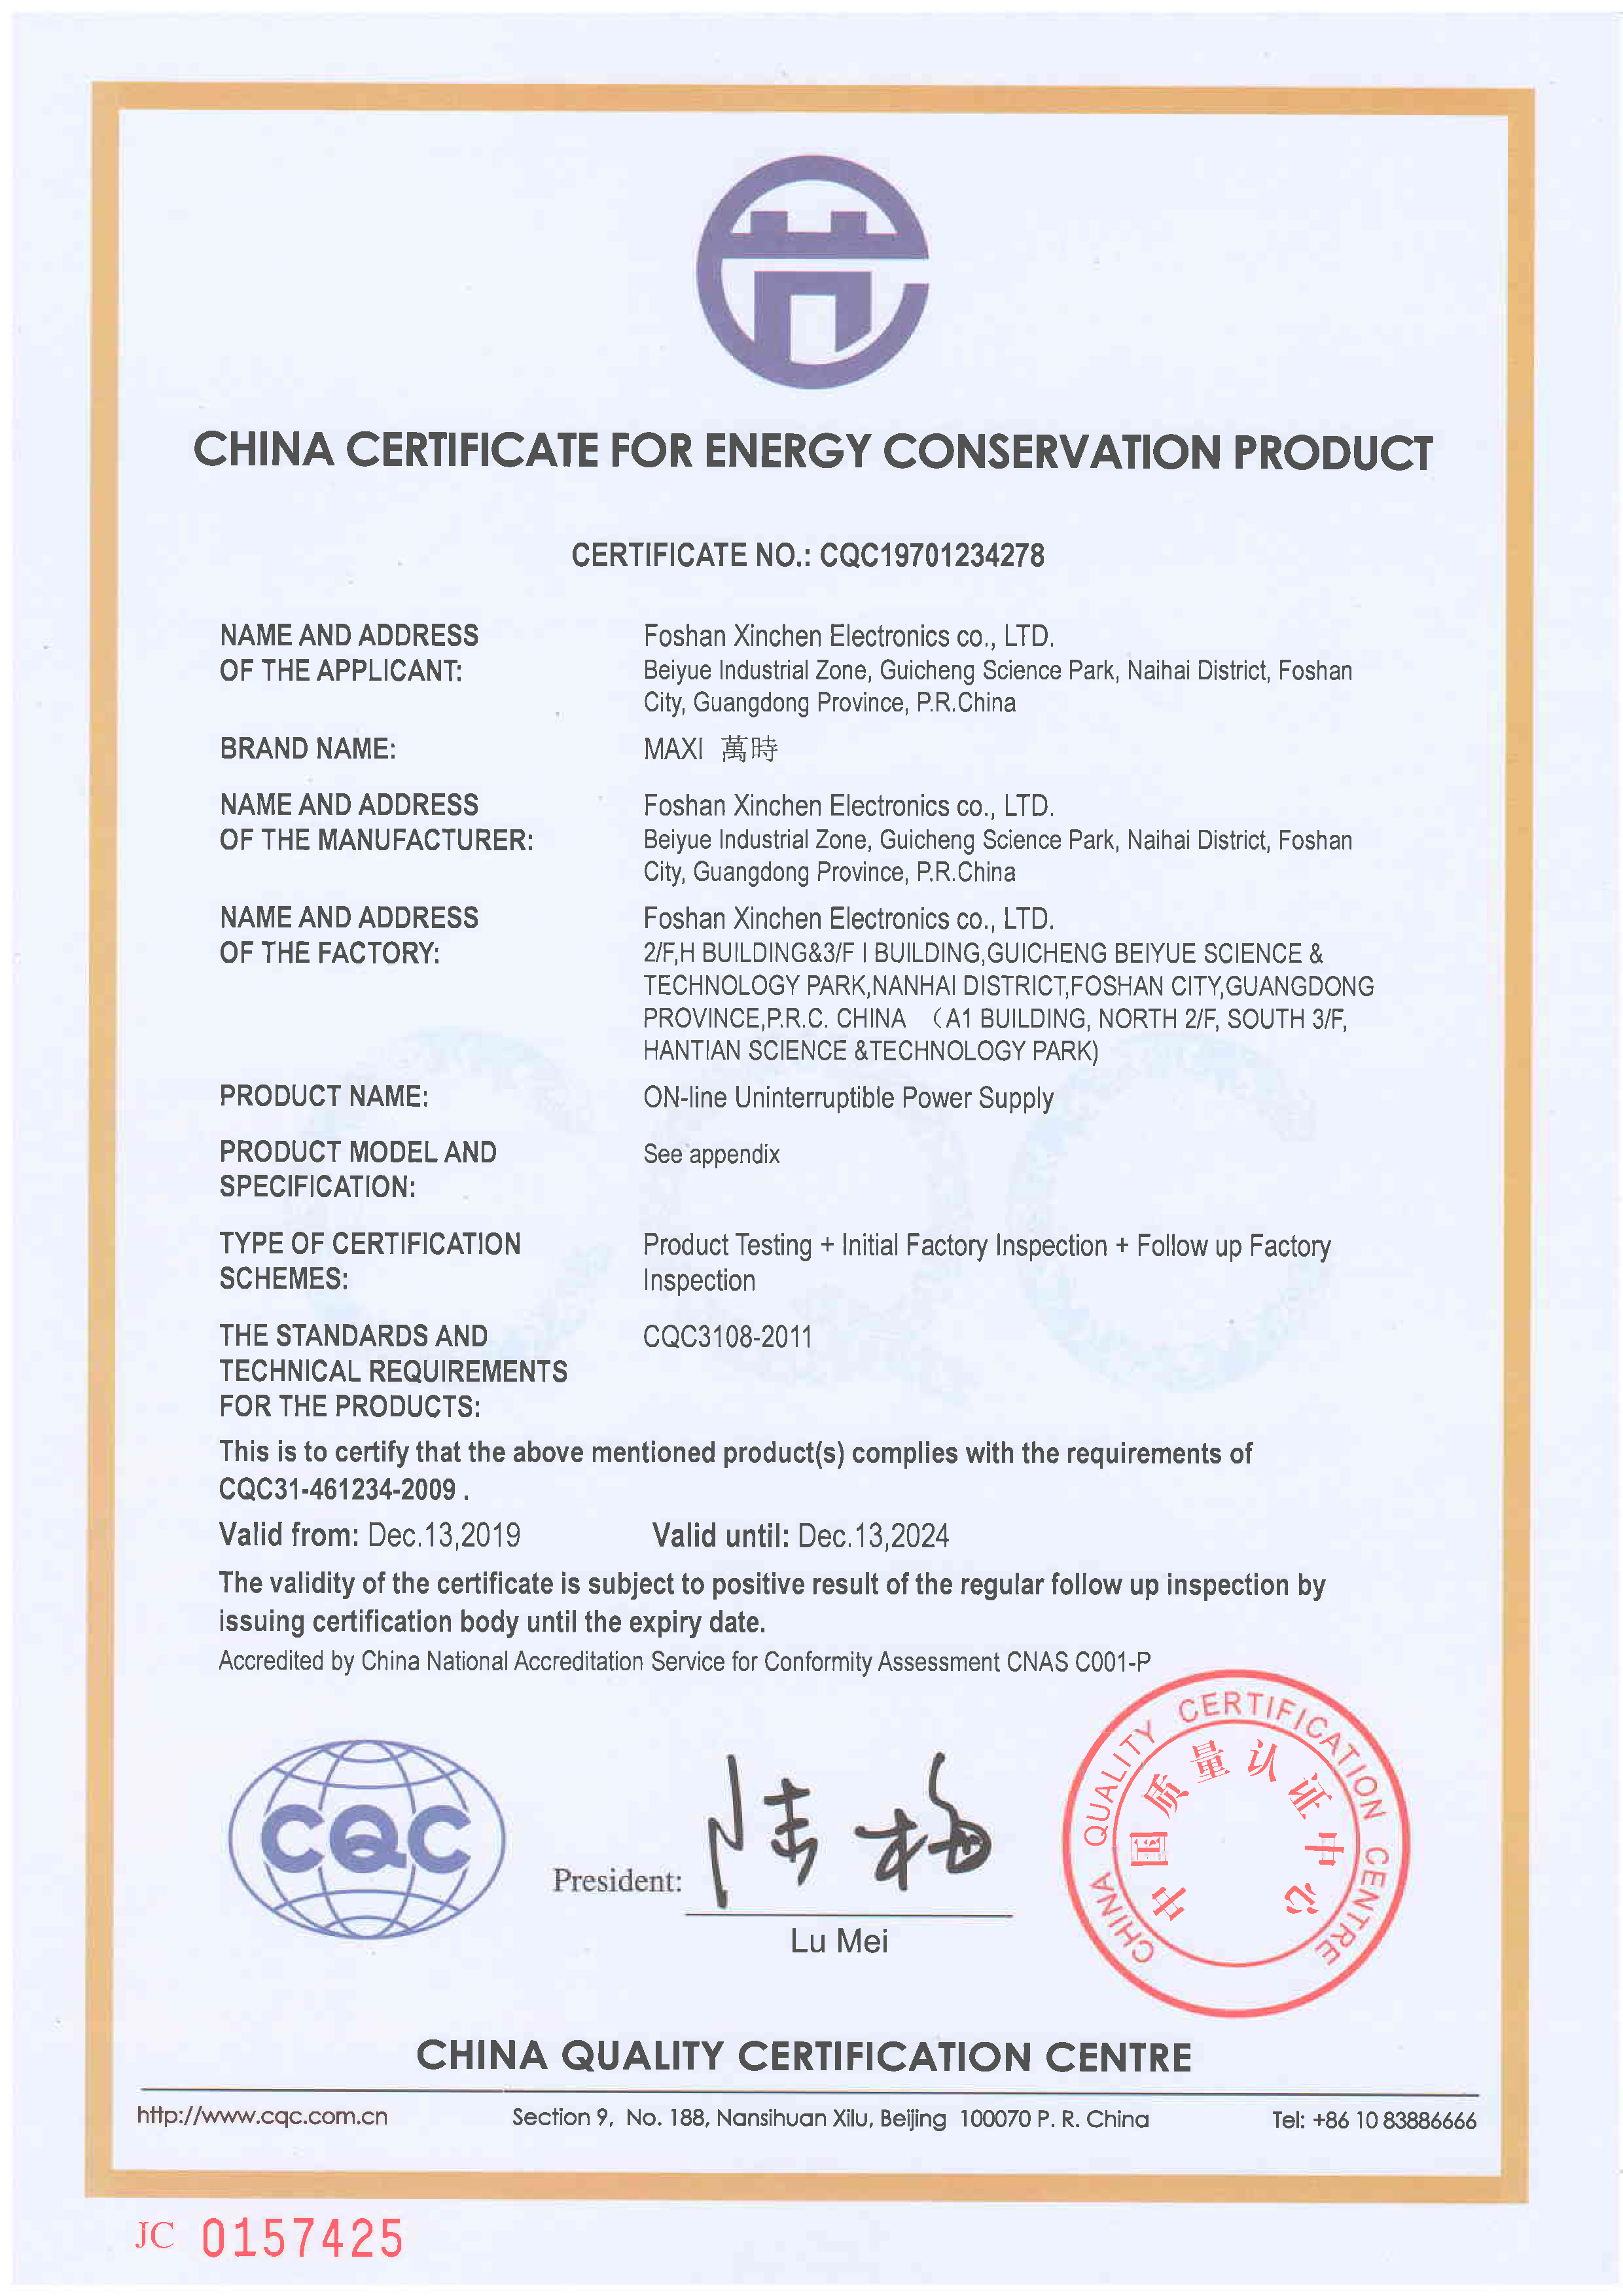 ऊर्जा संरक्षण उत्पाद के लिए चीन Ceriticate